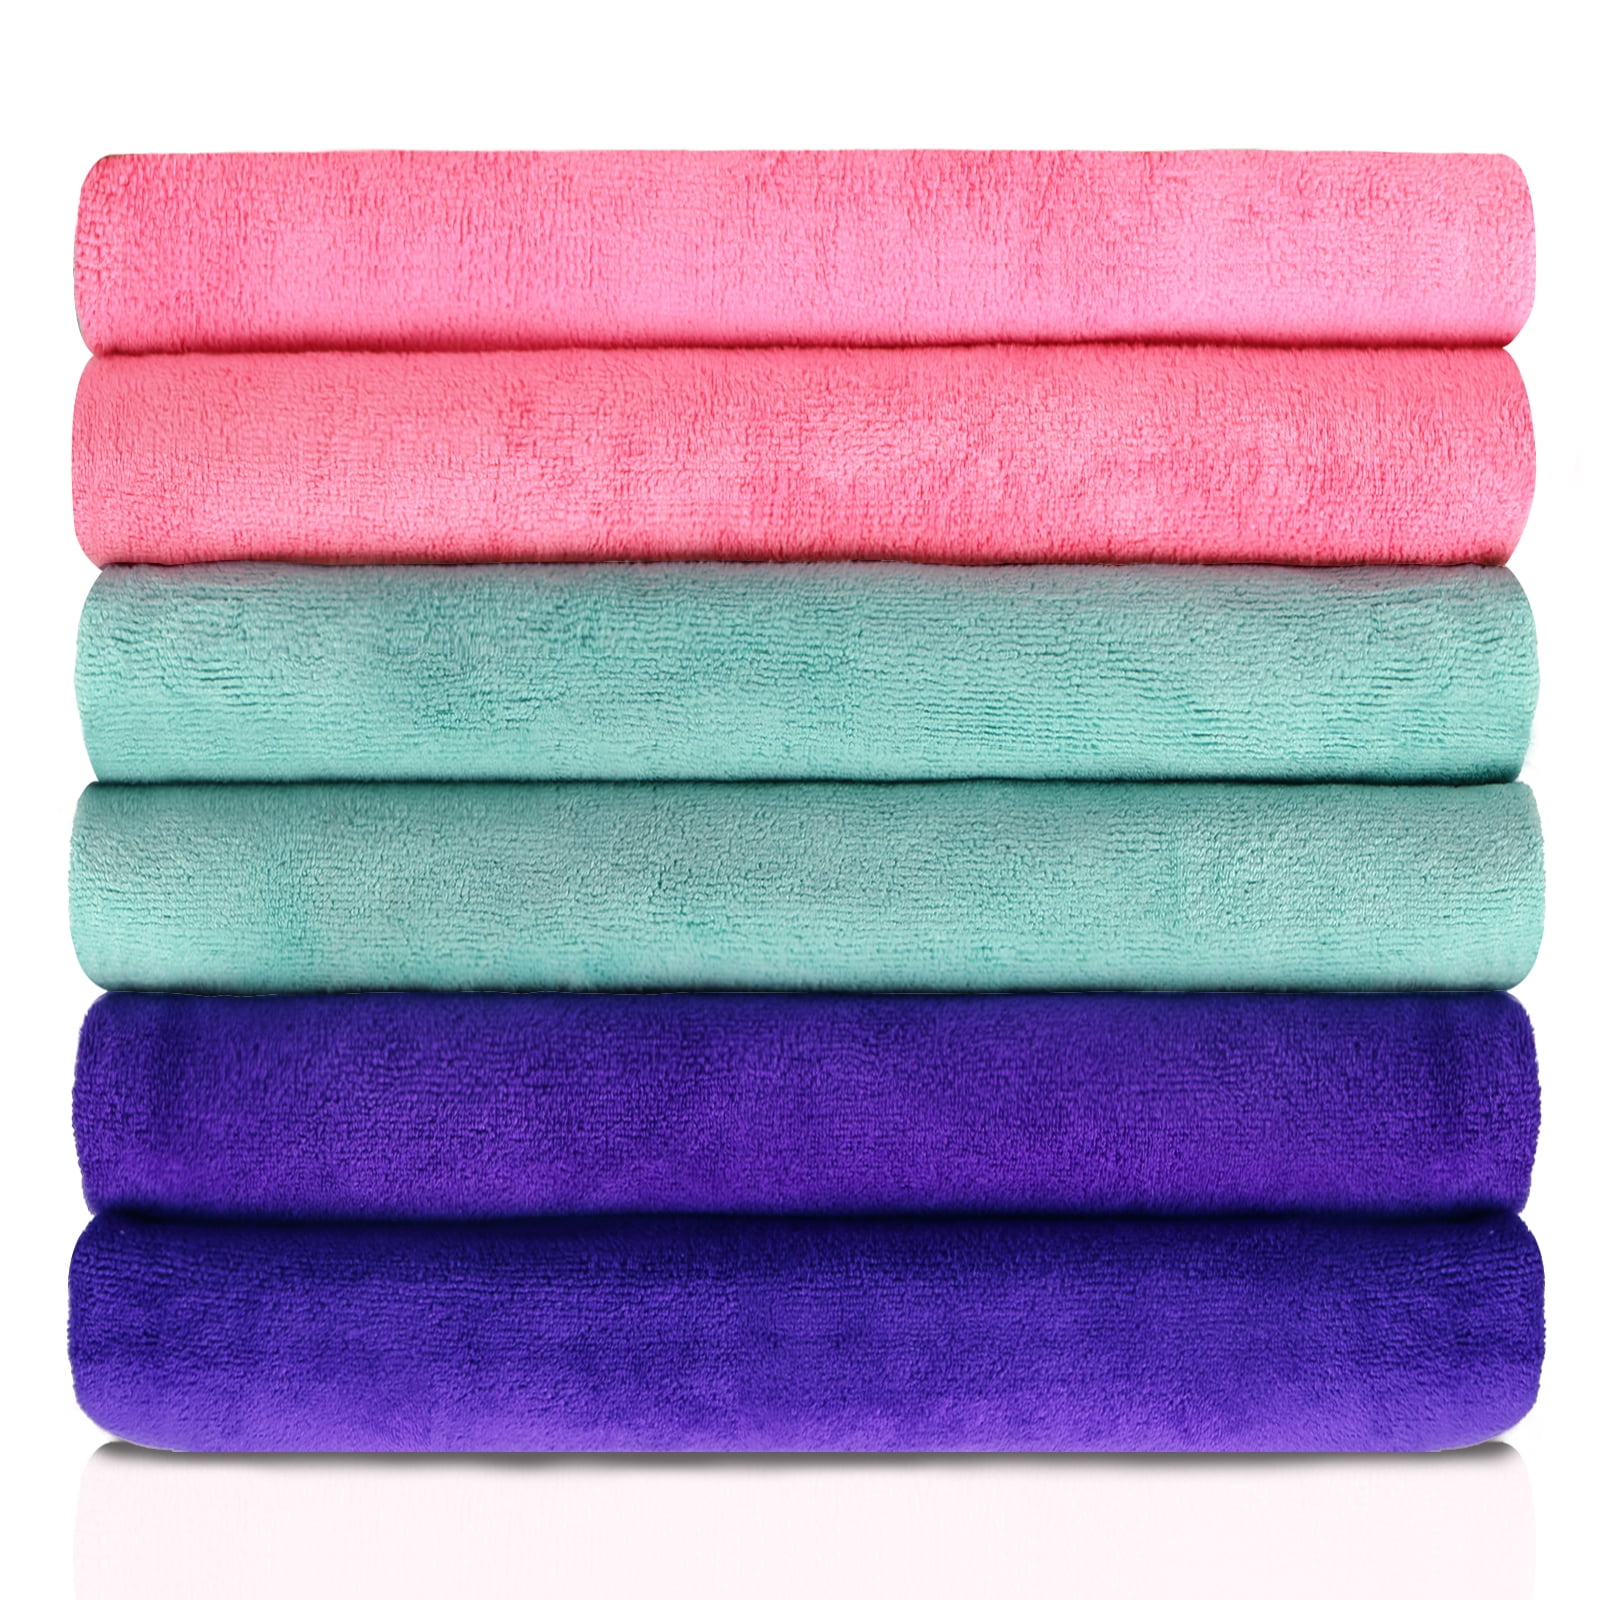 JML Bath Towel, Microfiber 6 Pack Towel Sets (27 x 55) - Extra Absorbent,  Fast Drying Multipurpose Use as Bath Fitness Towel, Sports Towels, Yoga